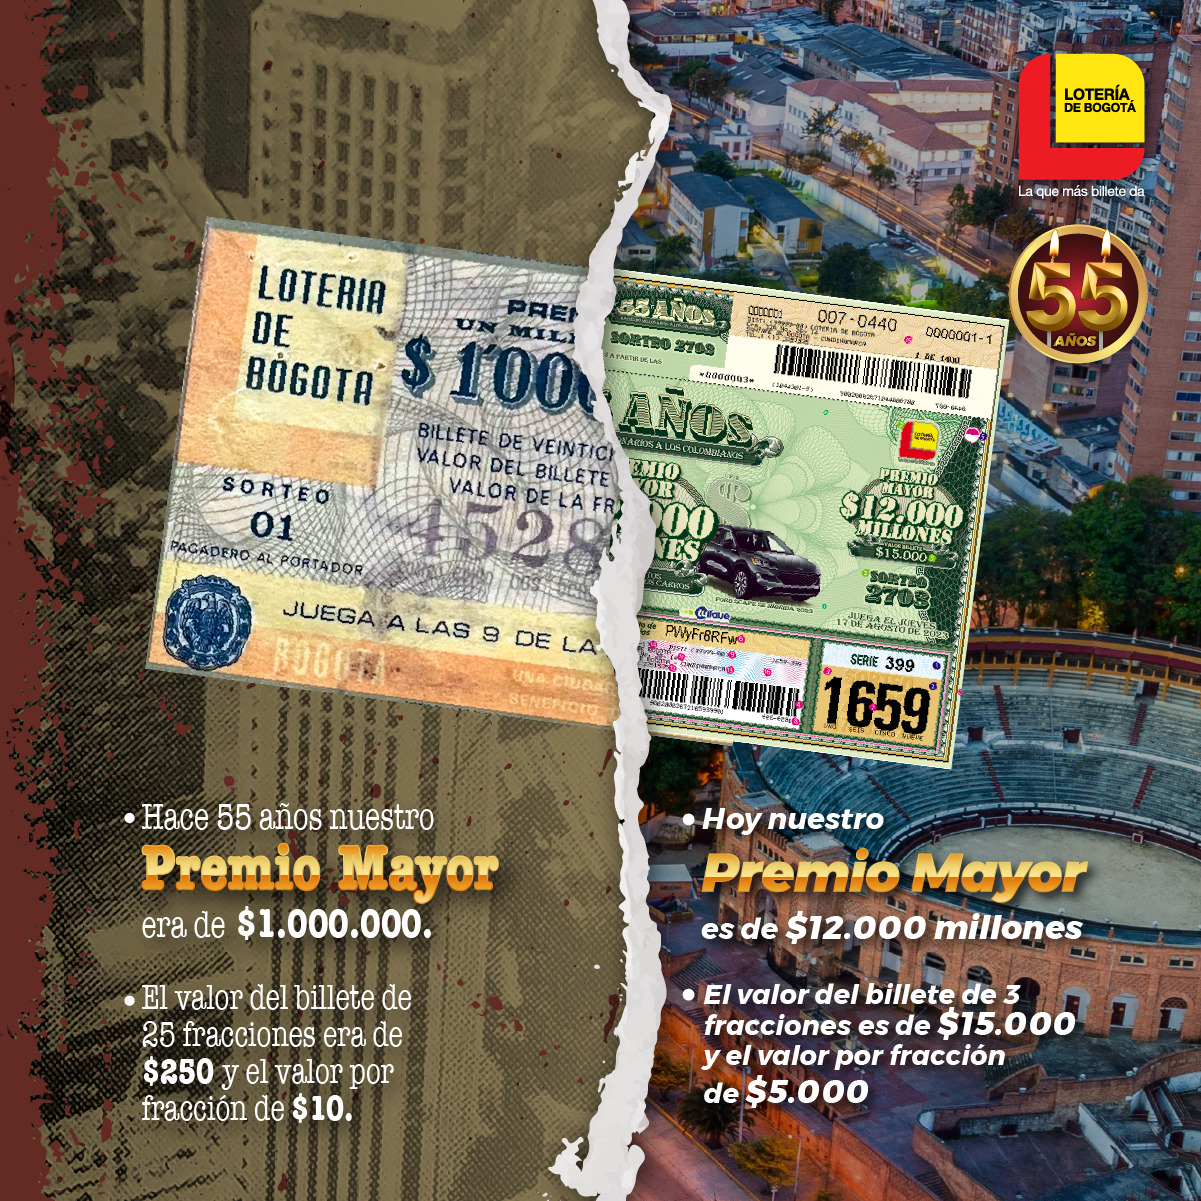 Celebramos aniversario 55 -Loteria de Bogota